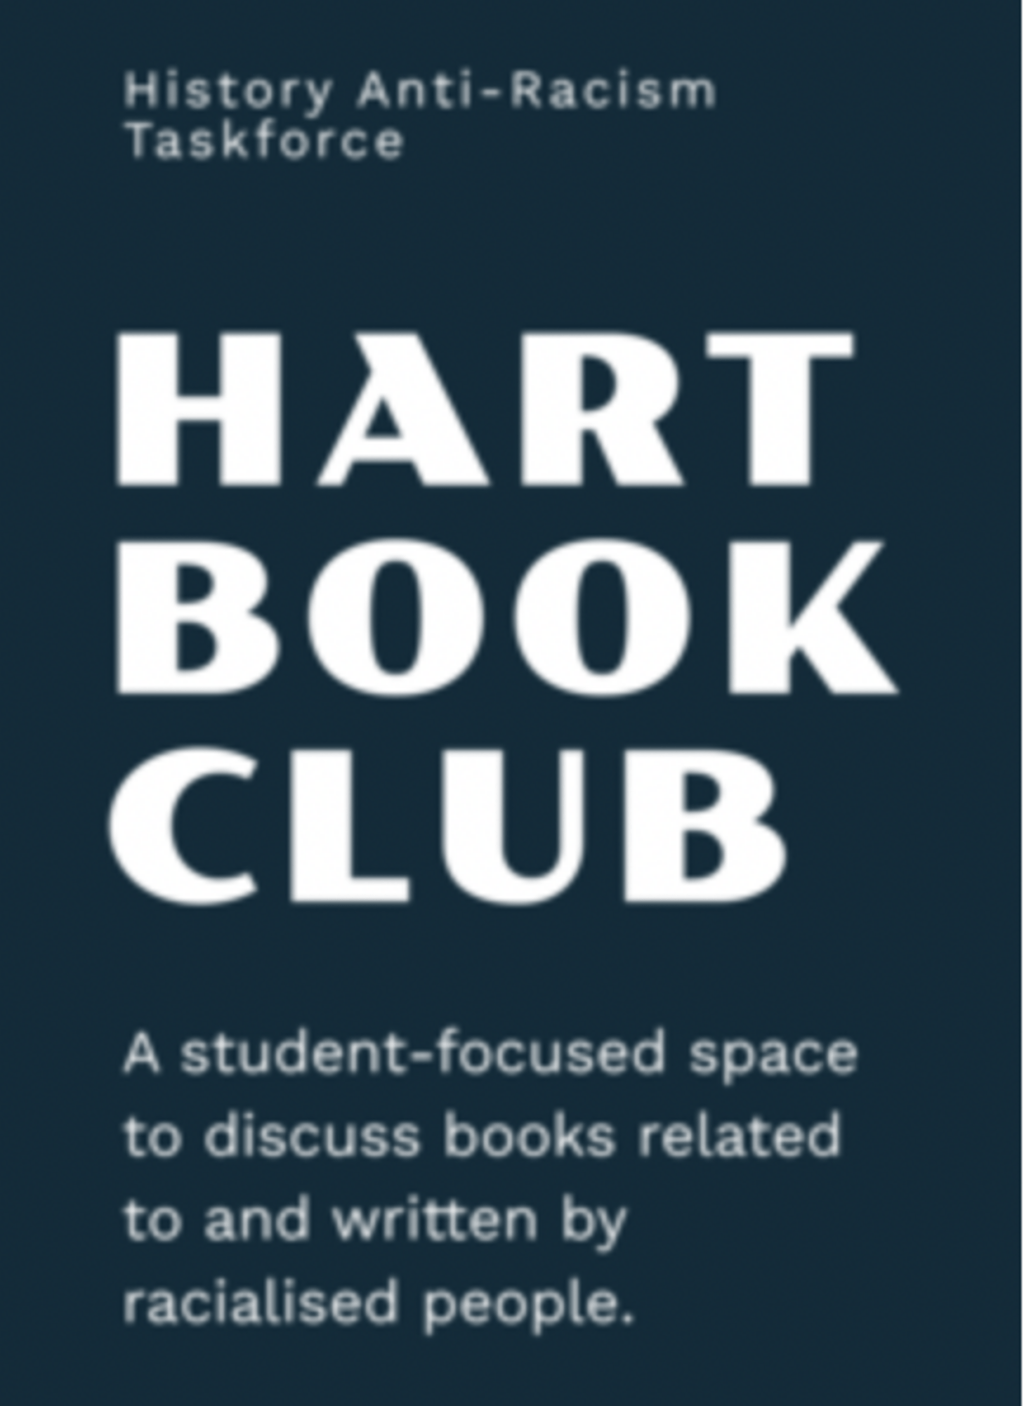 Hart Book Club info poster